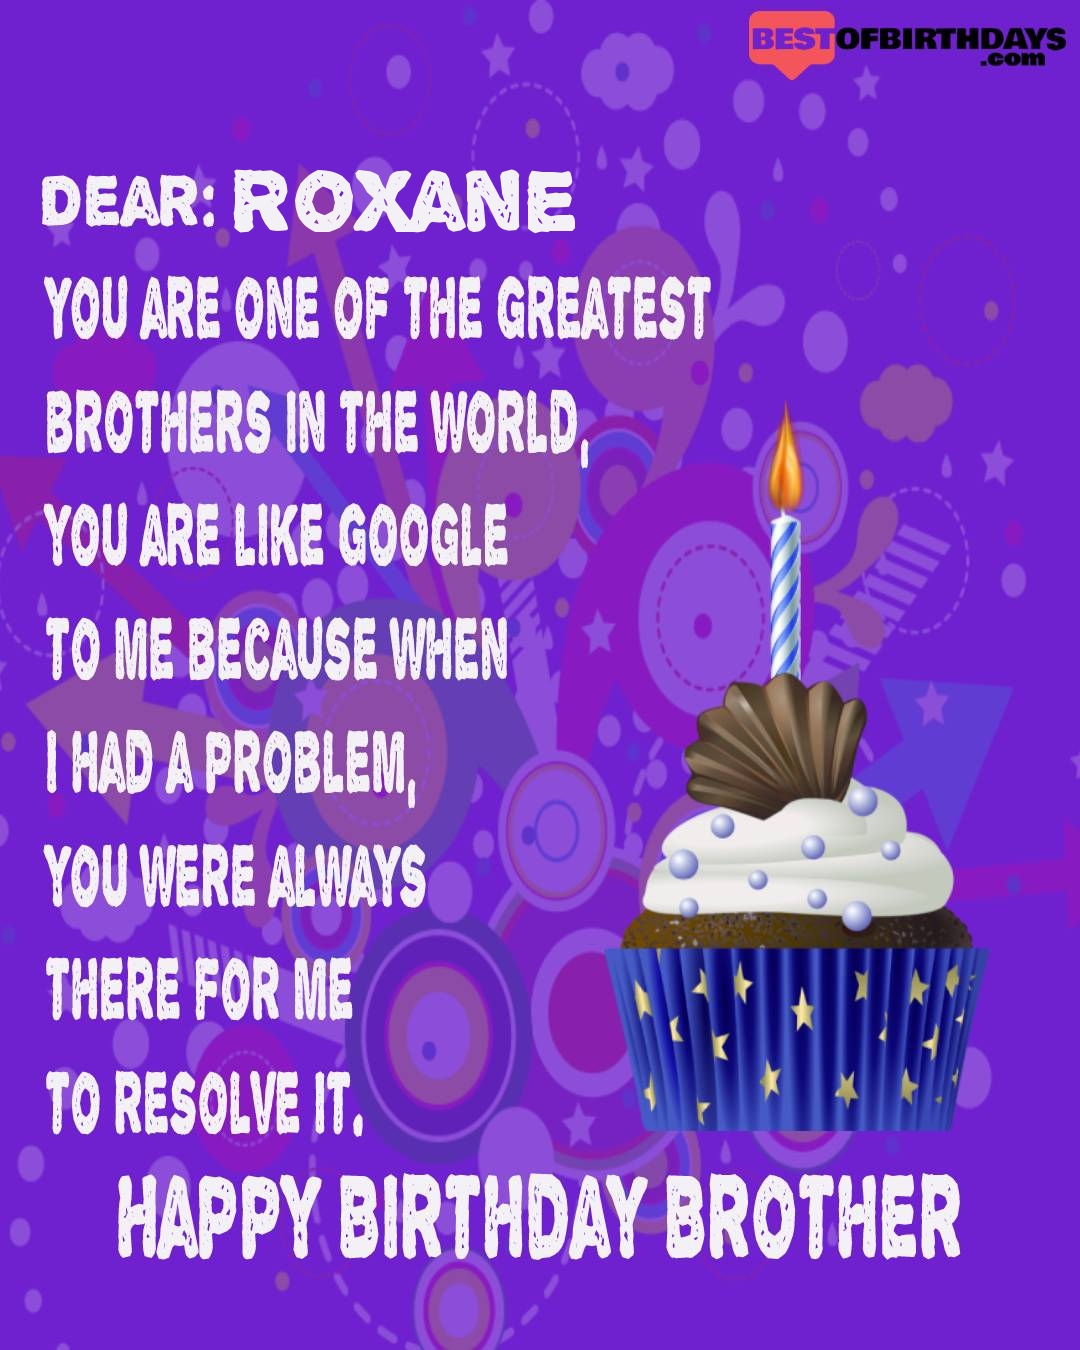 Happy birthday roxane bhai brother bro